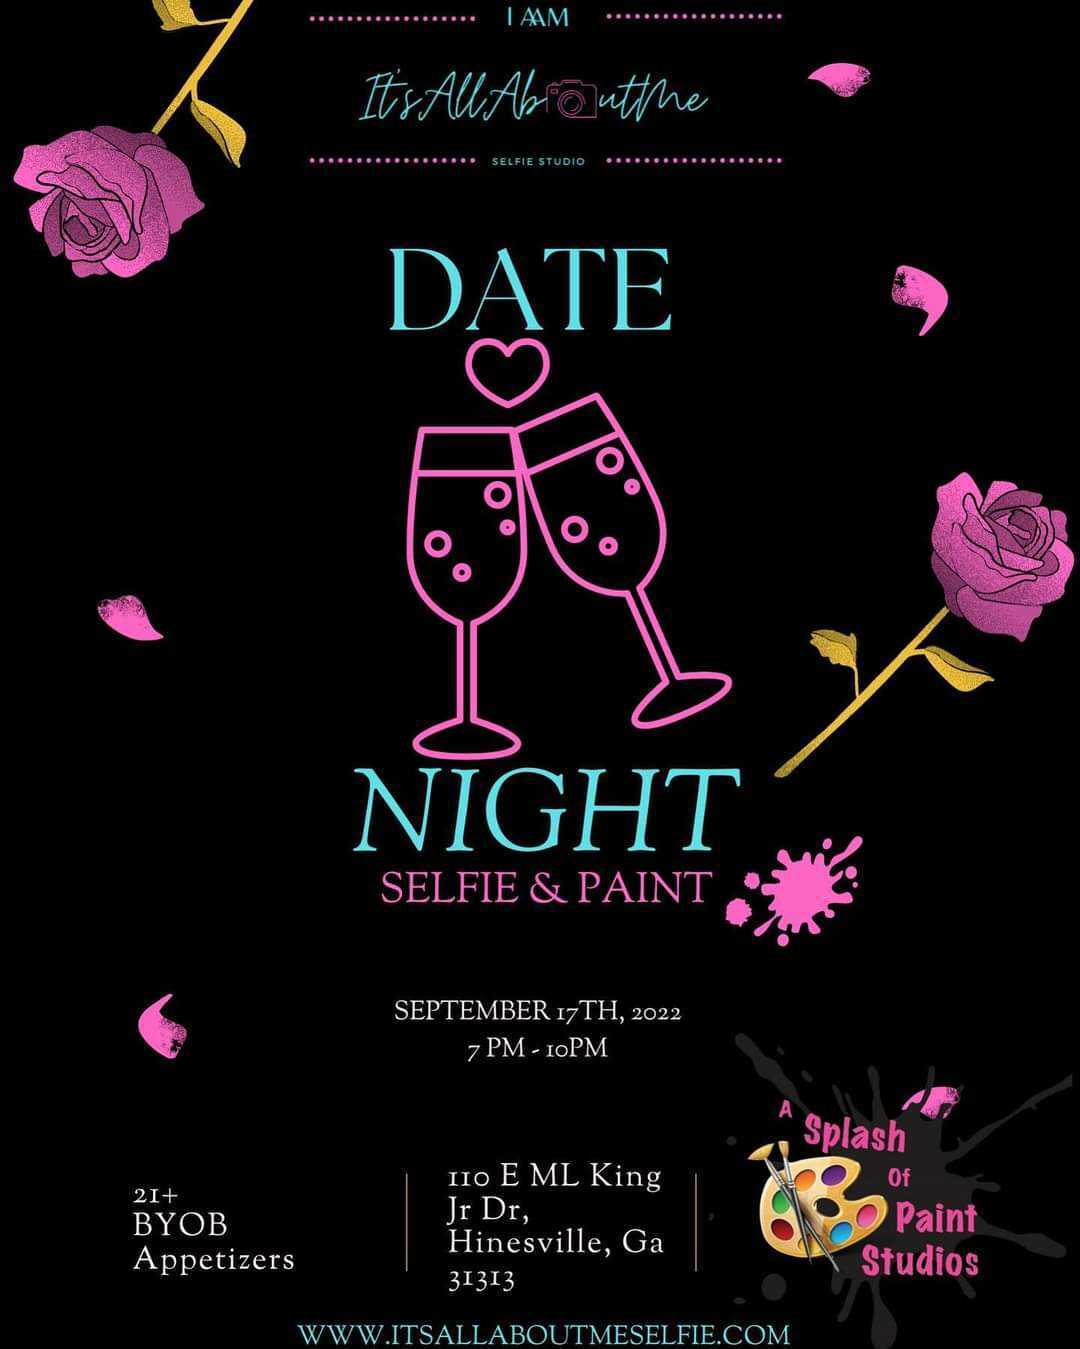 Flyer for Date Night: Selfie & Paint